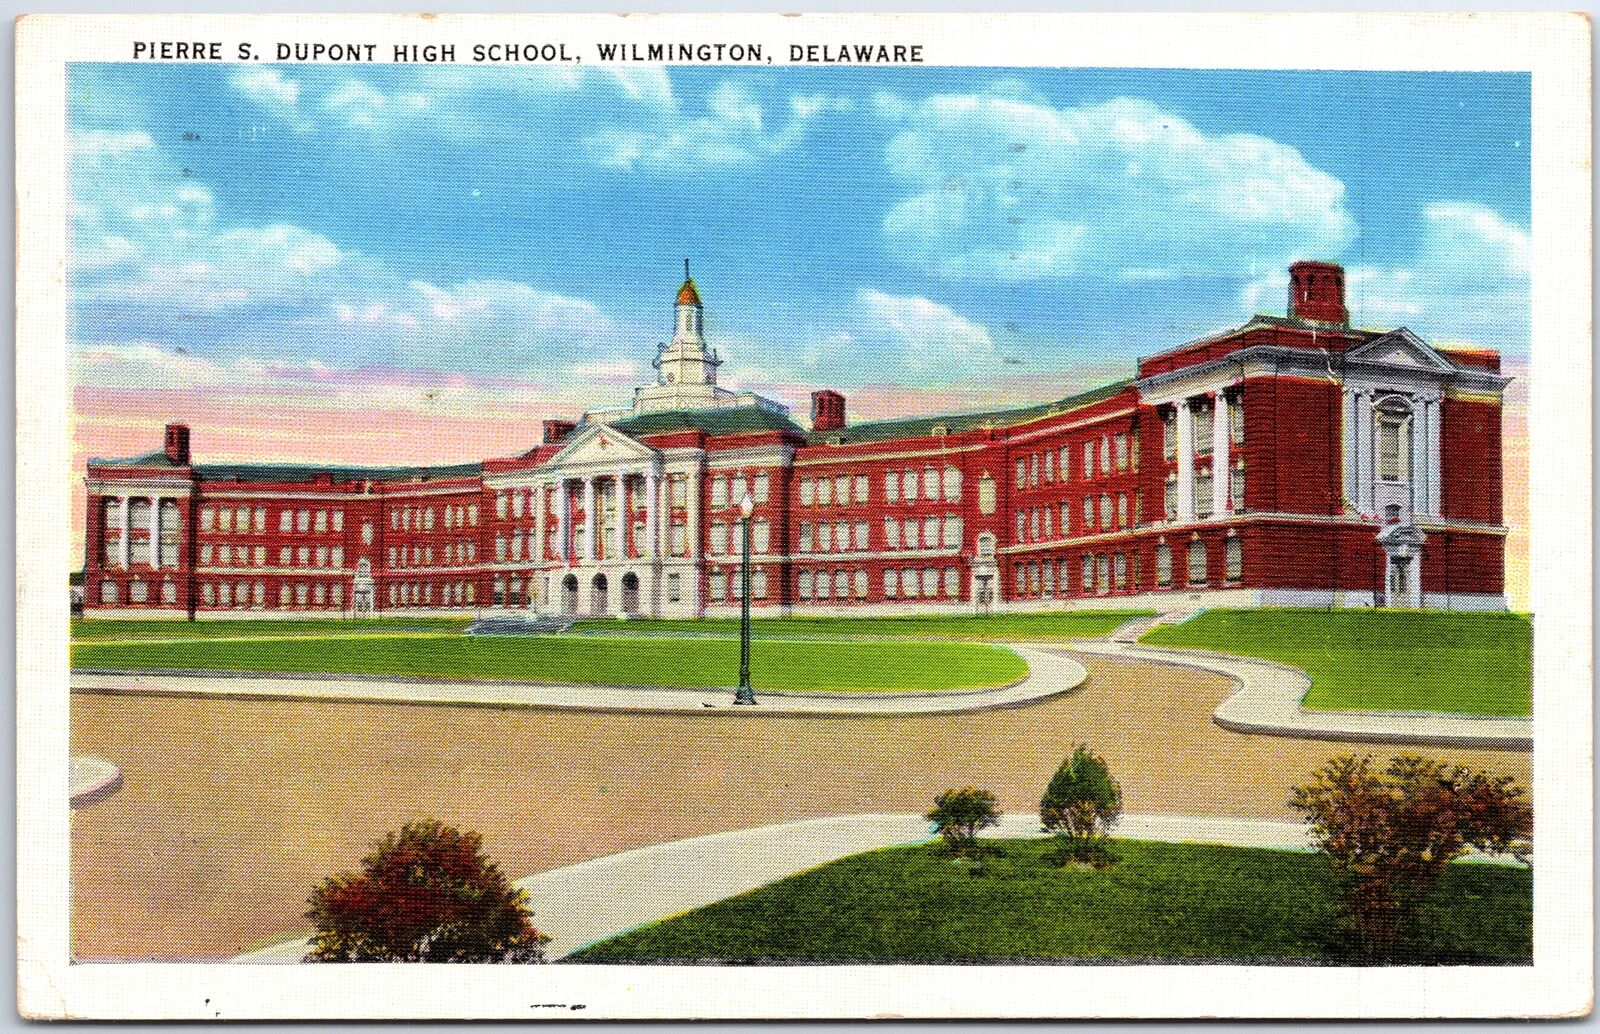 VINTAGE POSTCARD PIERRE S. DUPONT HIGH SCHOOL AT WILMINGTON DELAWARE (1920s)